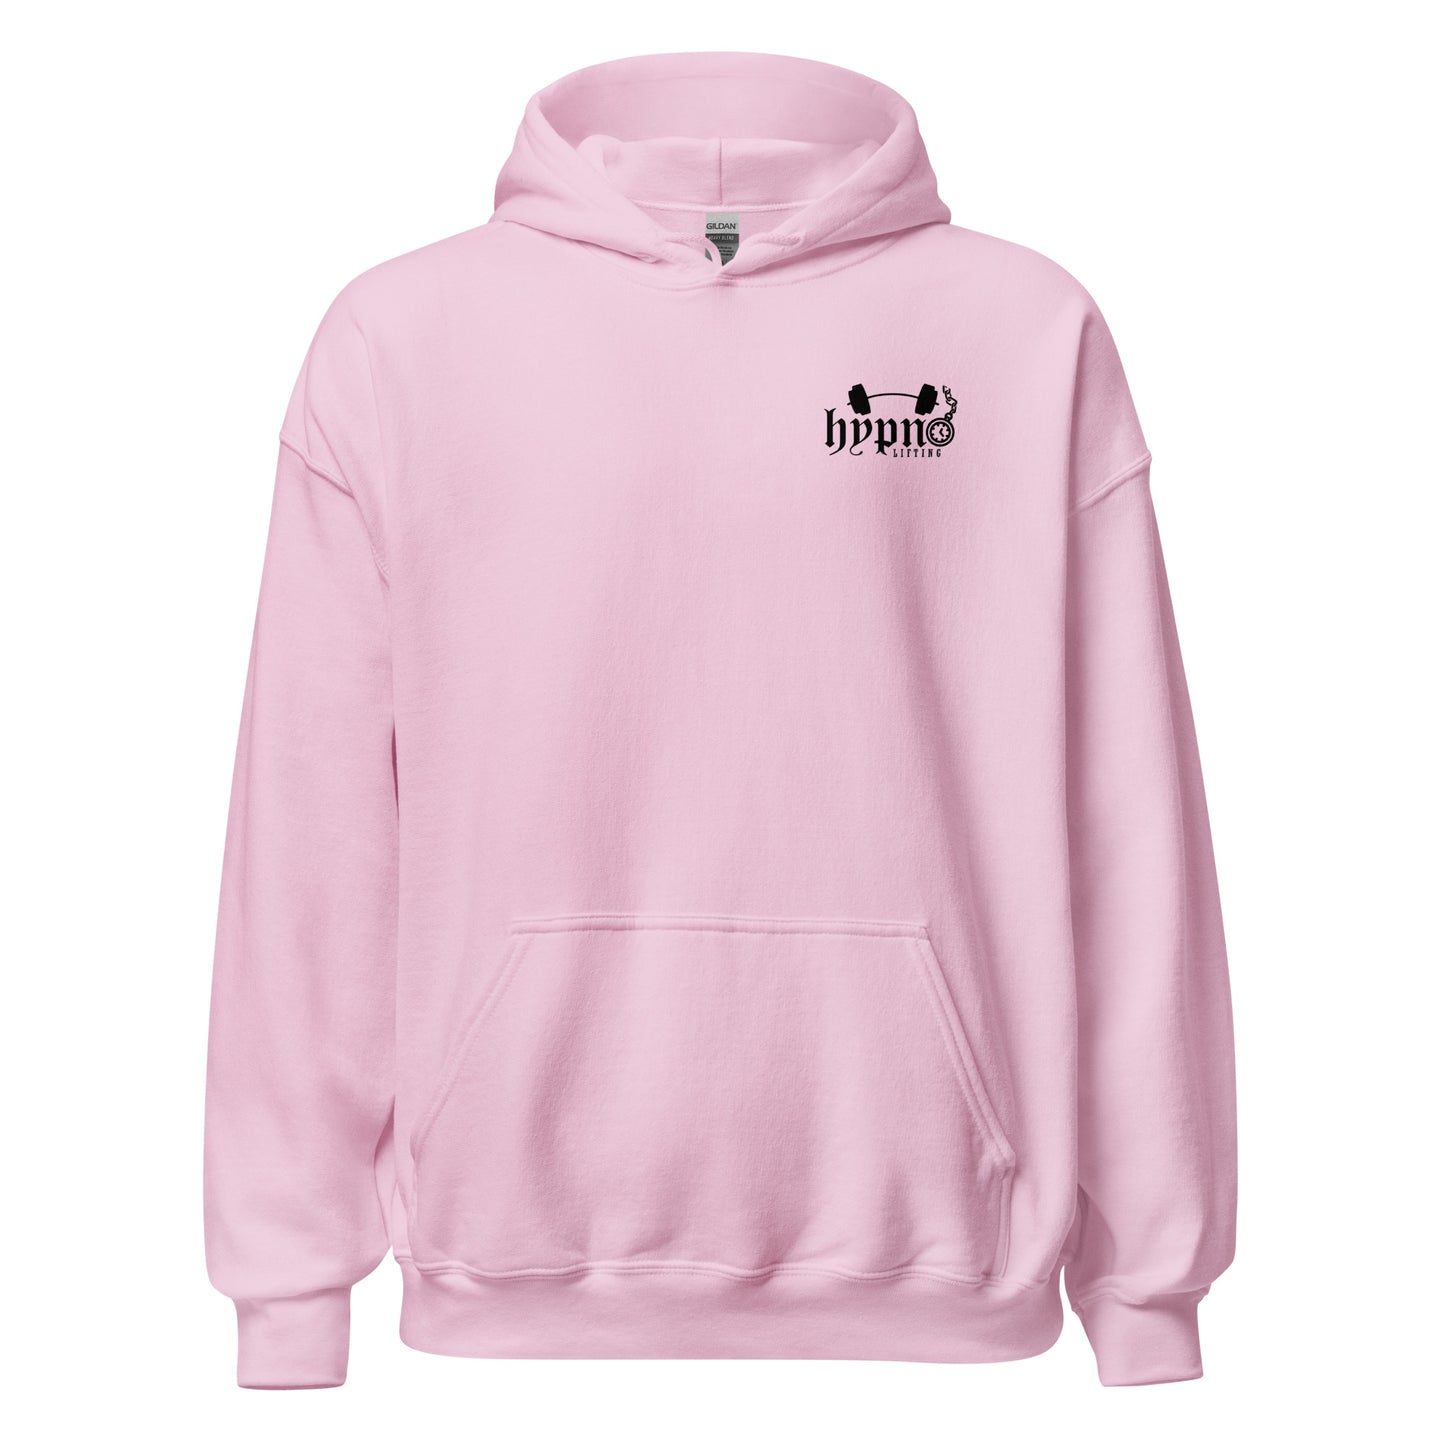 Hypno Lifting front logo design unisex hoodie